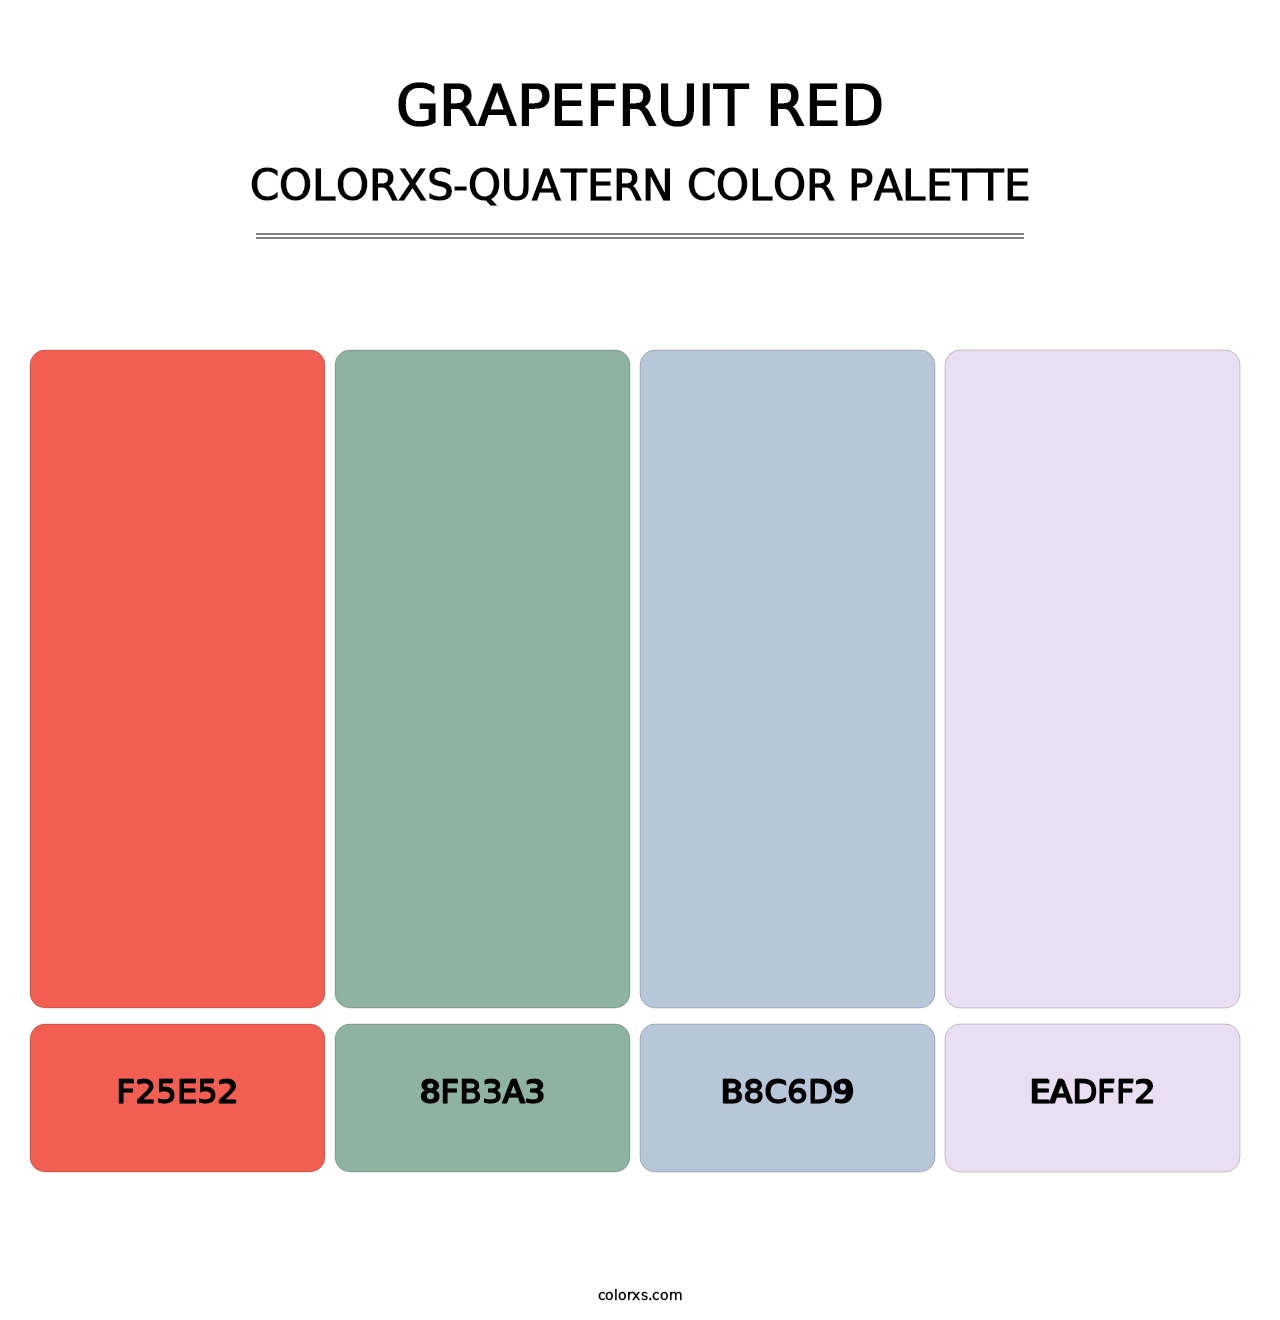 Grapefruit Red - Colorxs Quatern Palette